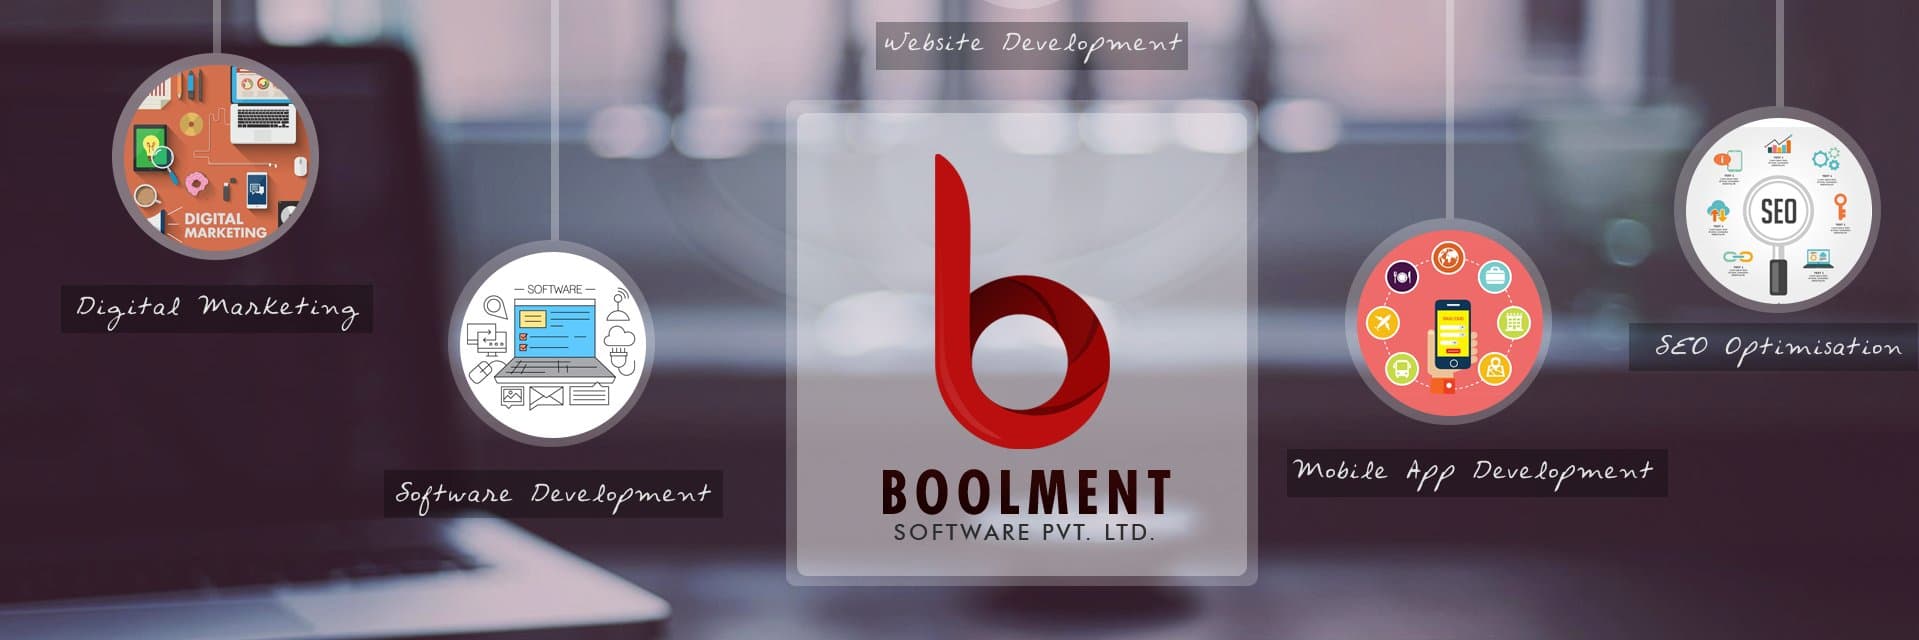 Boolment Software Development Pvt Ltd cover picture